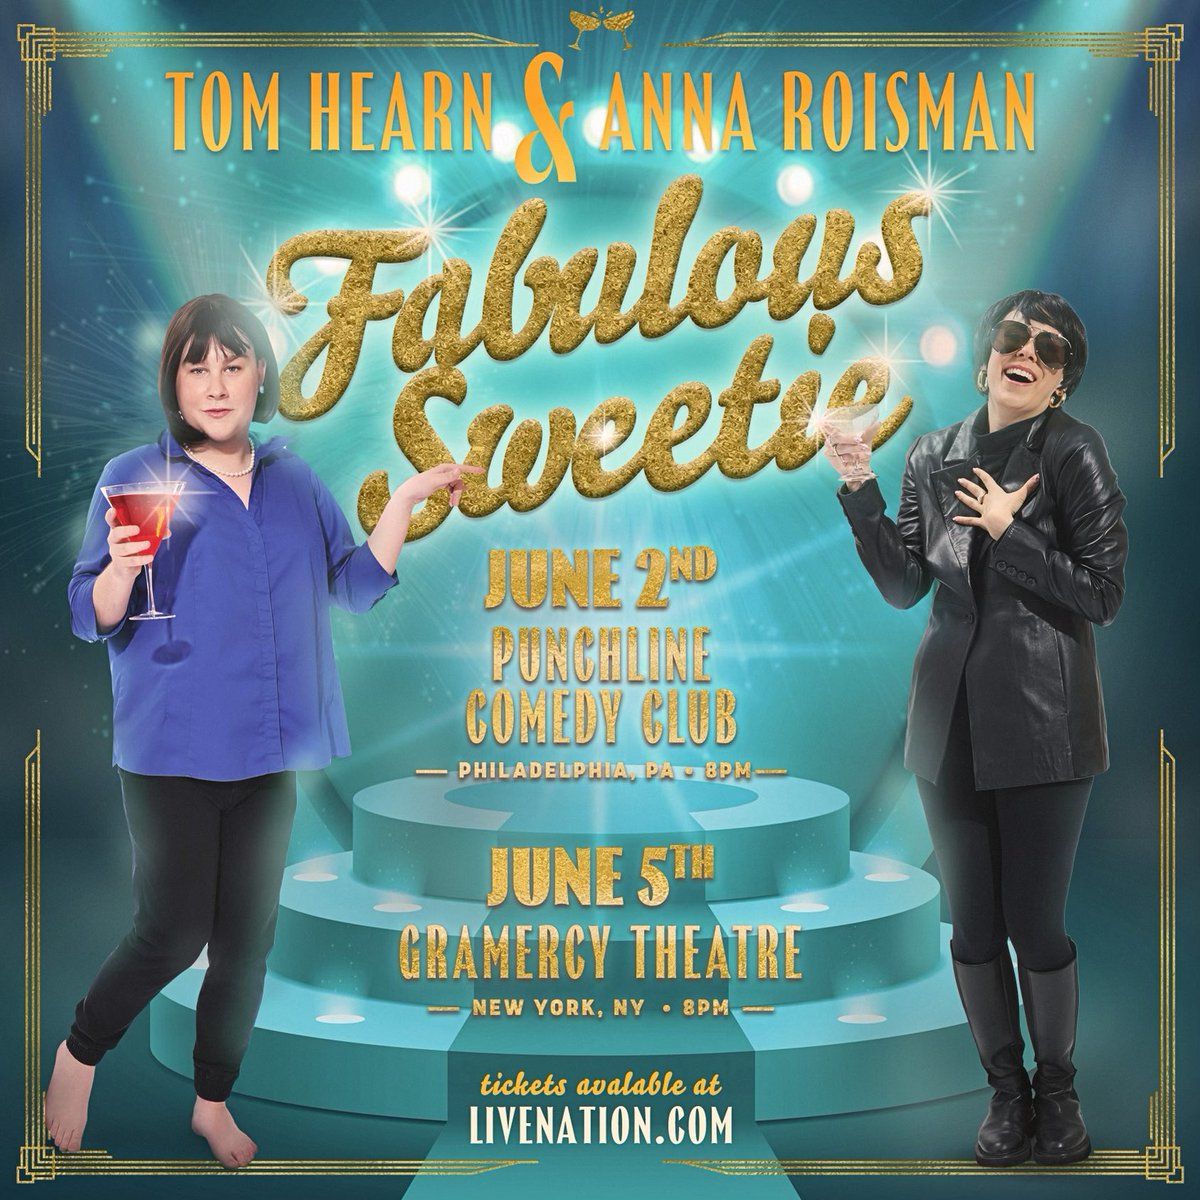 Tom Hearn and Anna Roisman - Fabulous Sweetie Tour